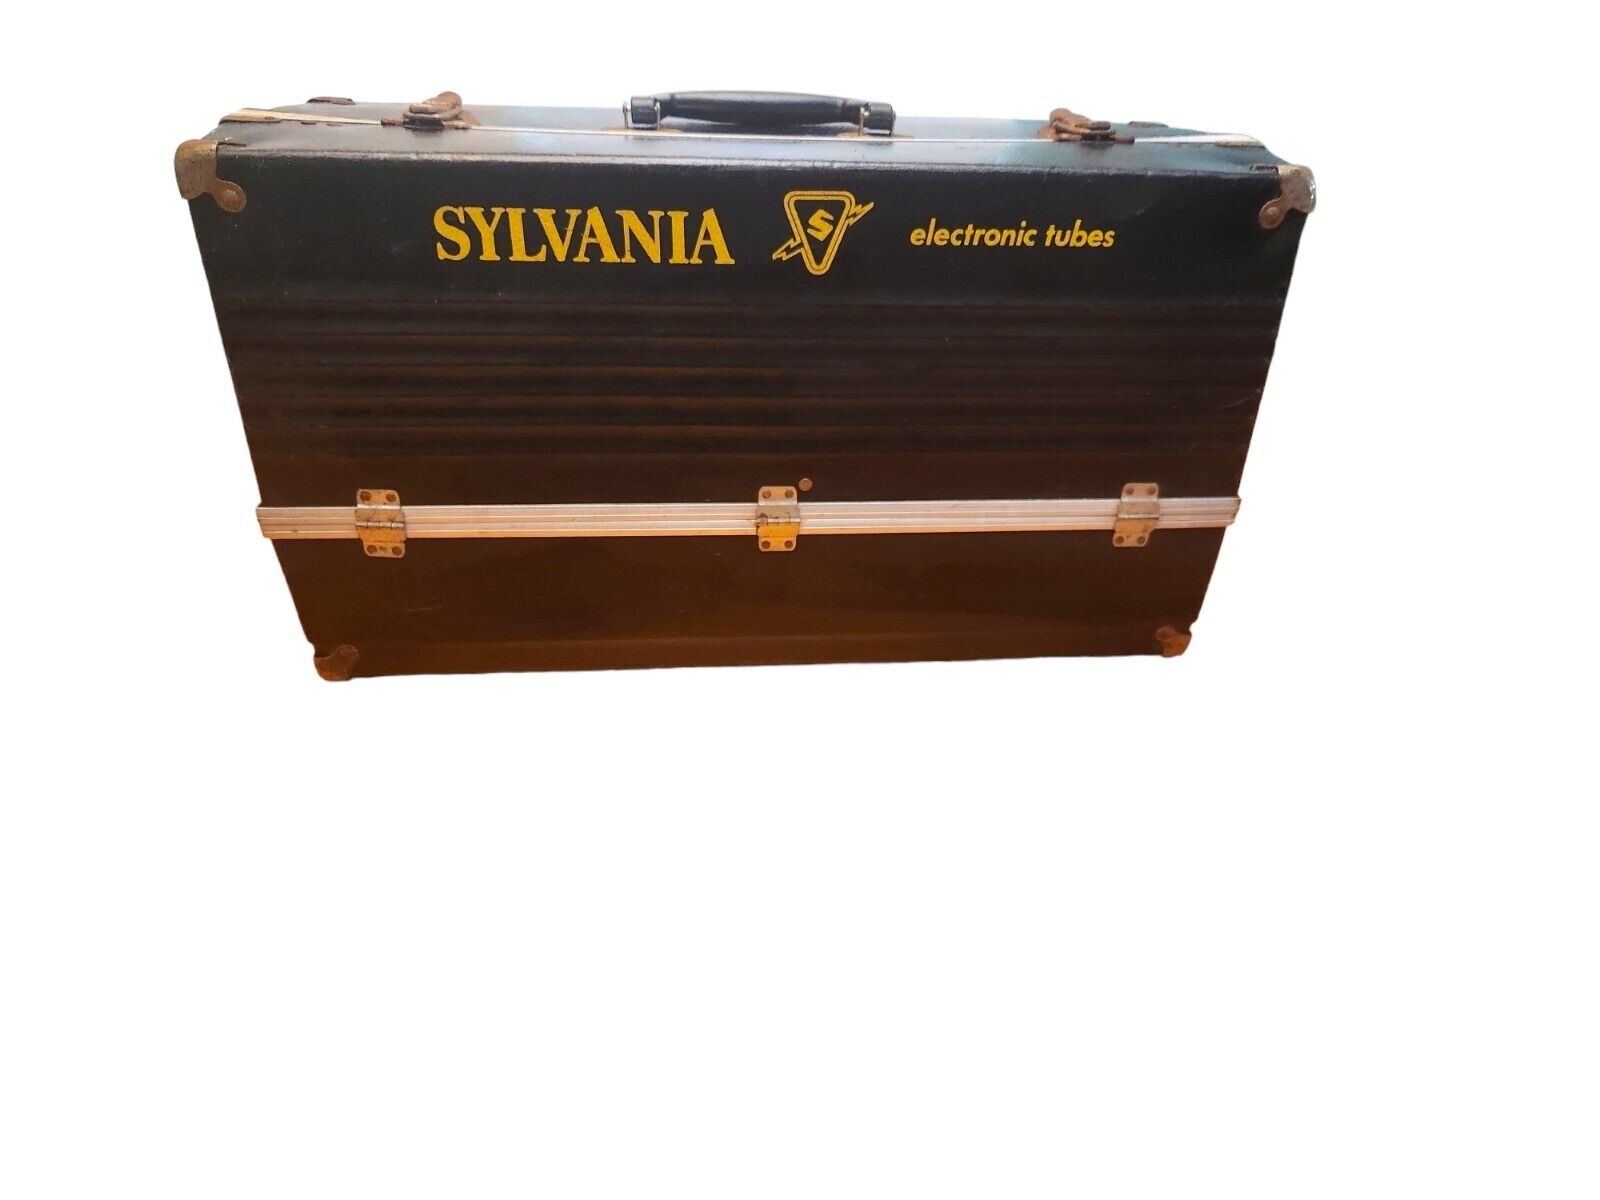 Vintage Sylvania Electronic Tubes Serviceman Repair Case with Foldout Large Size